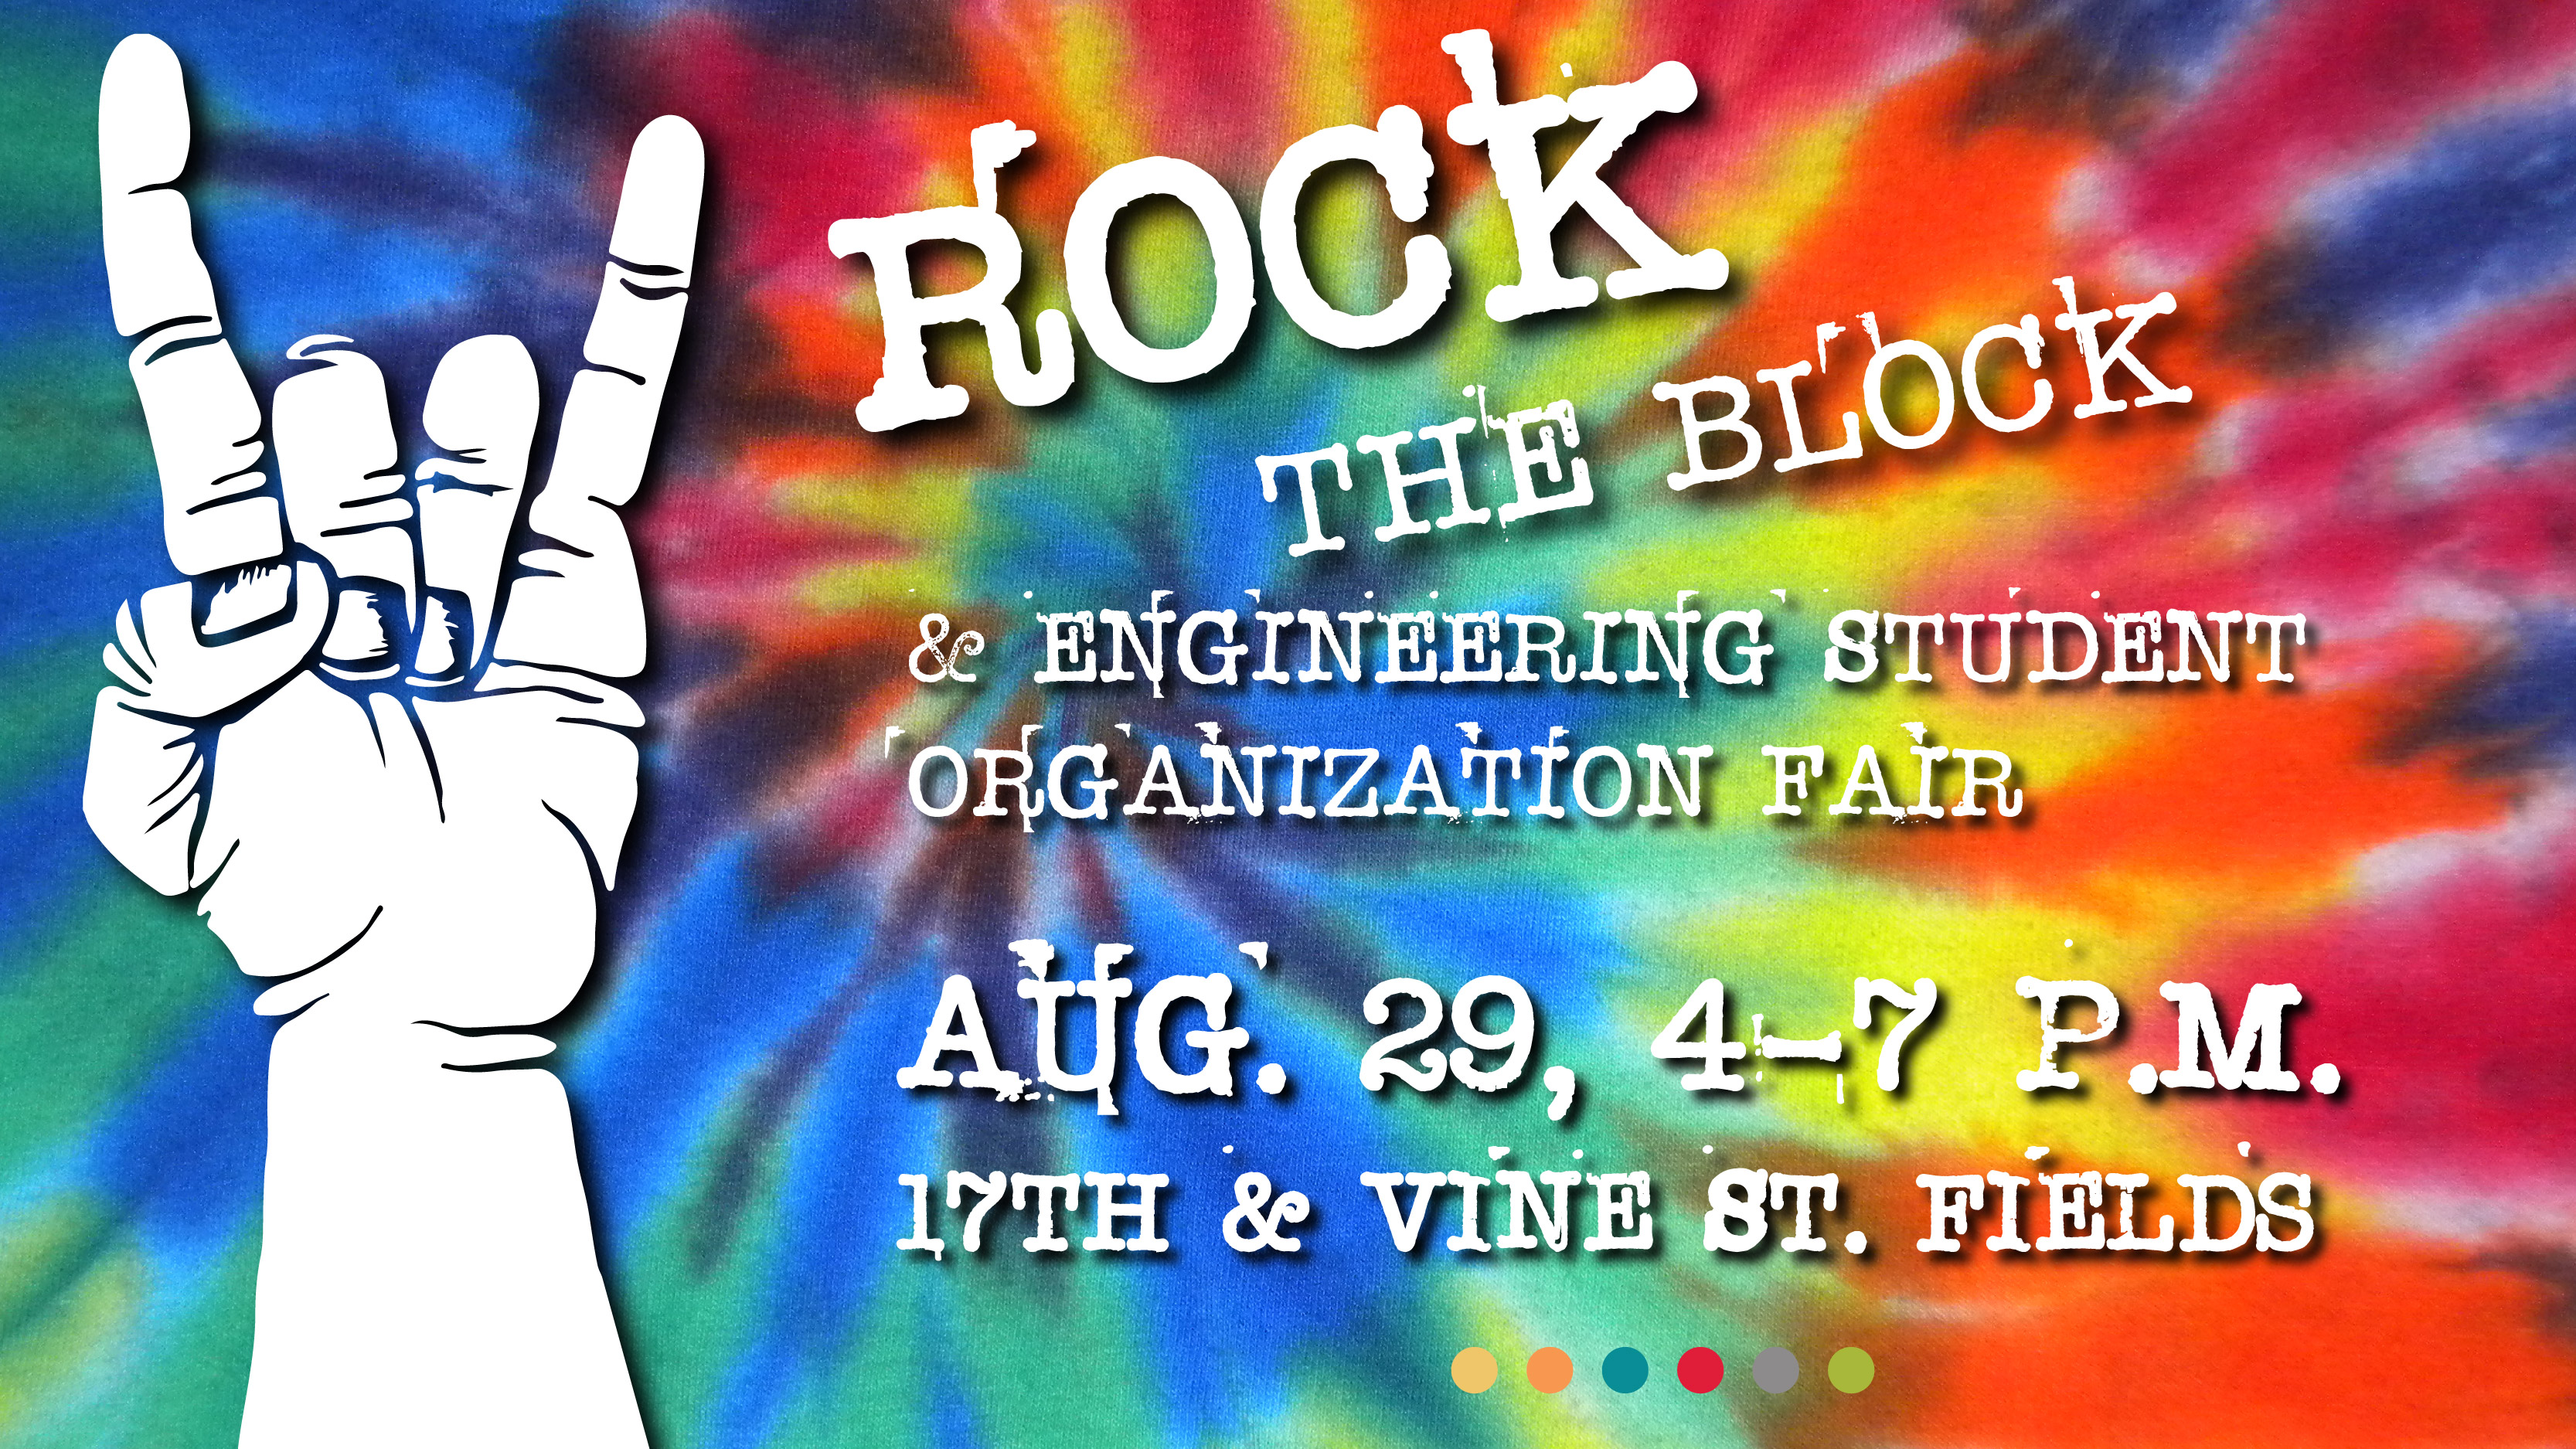 Rock the Block is Thursday